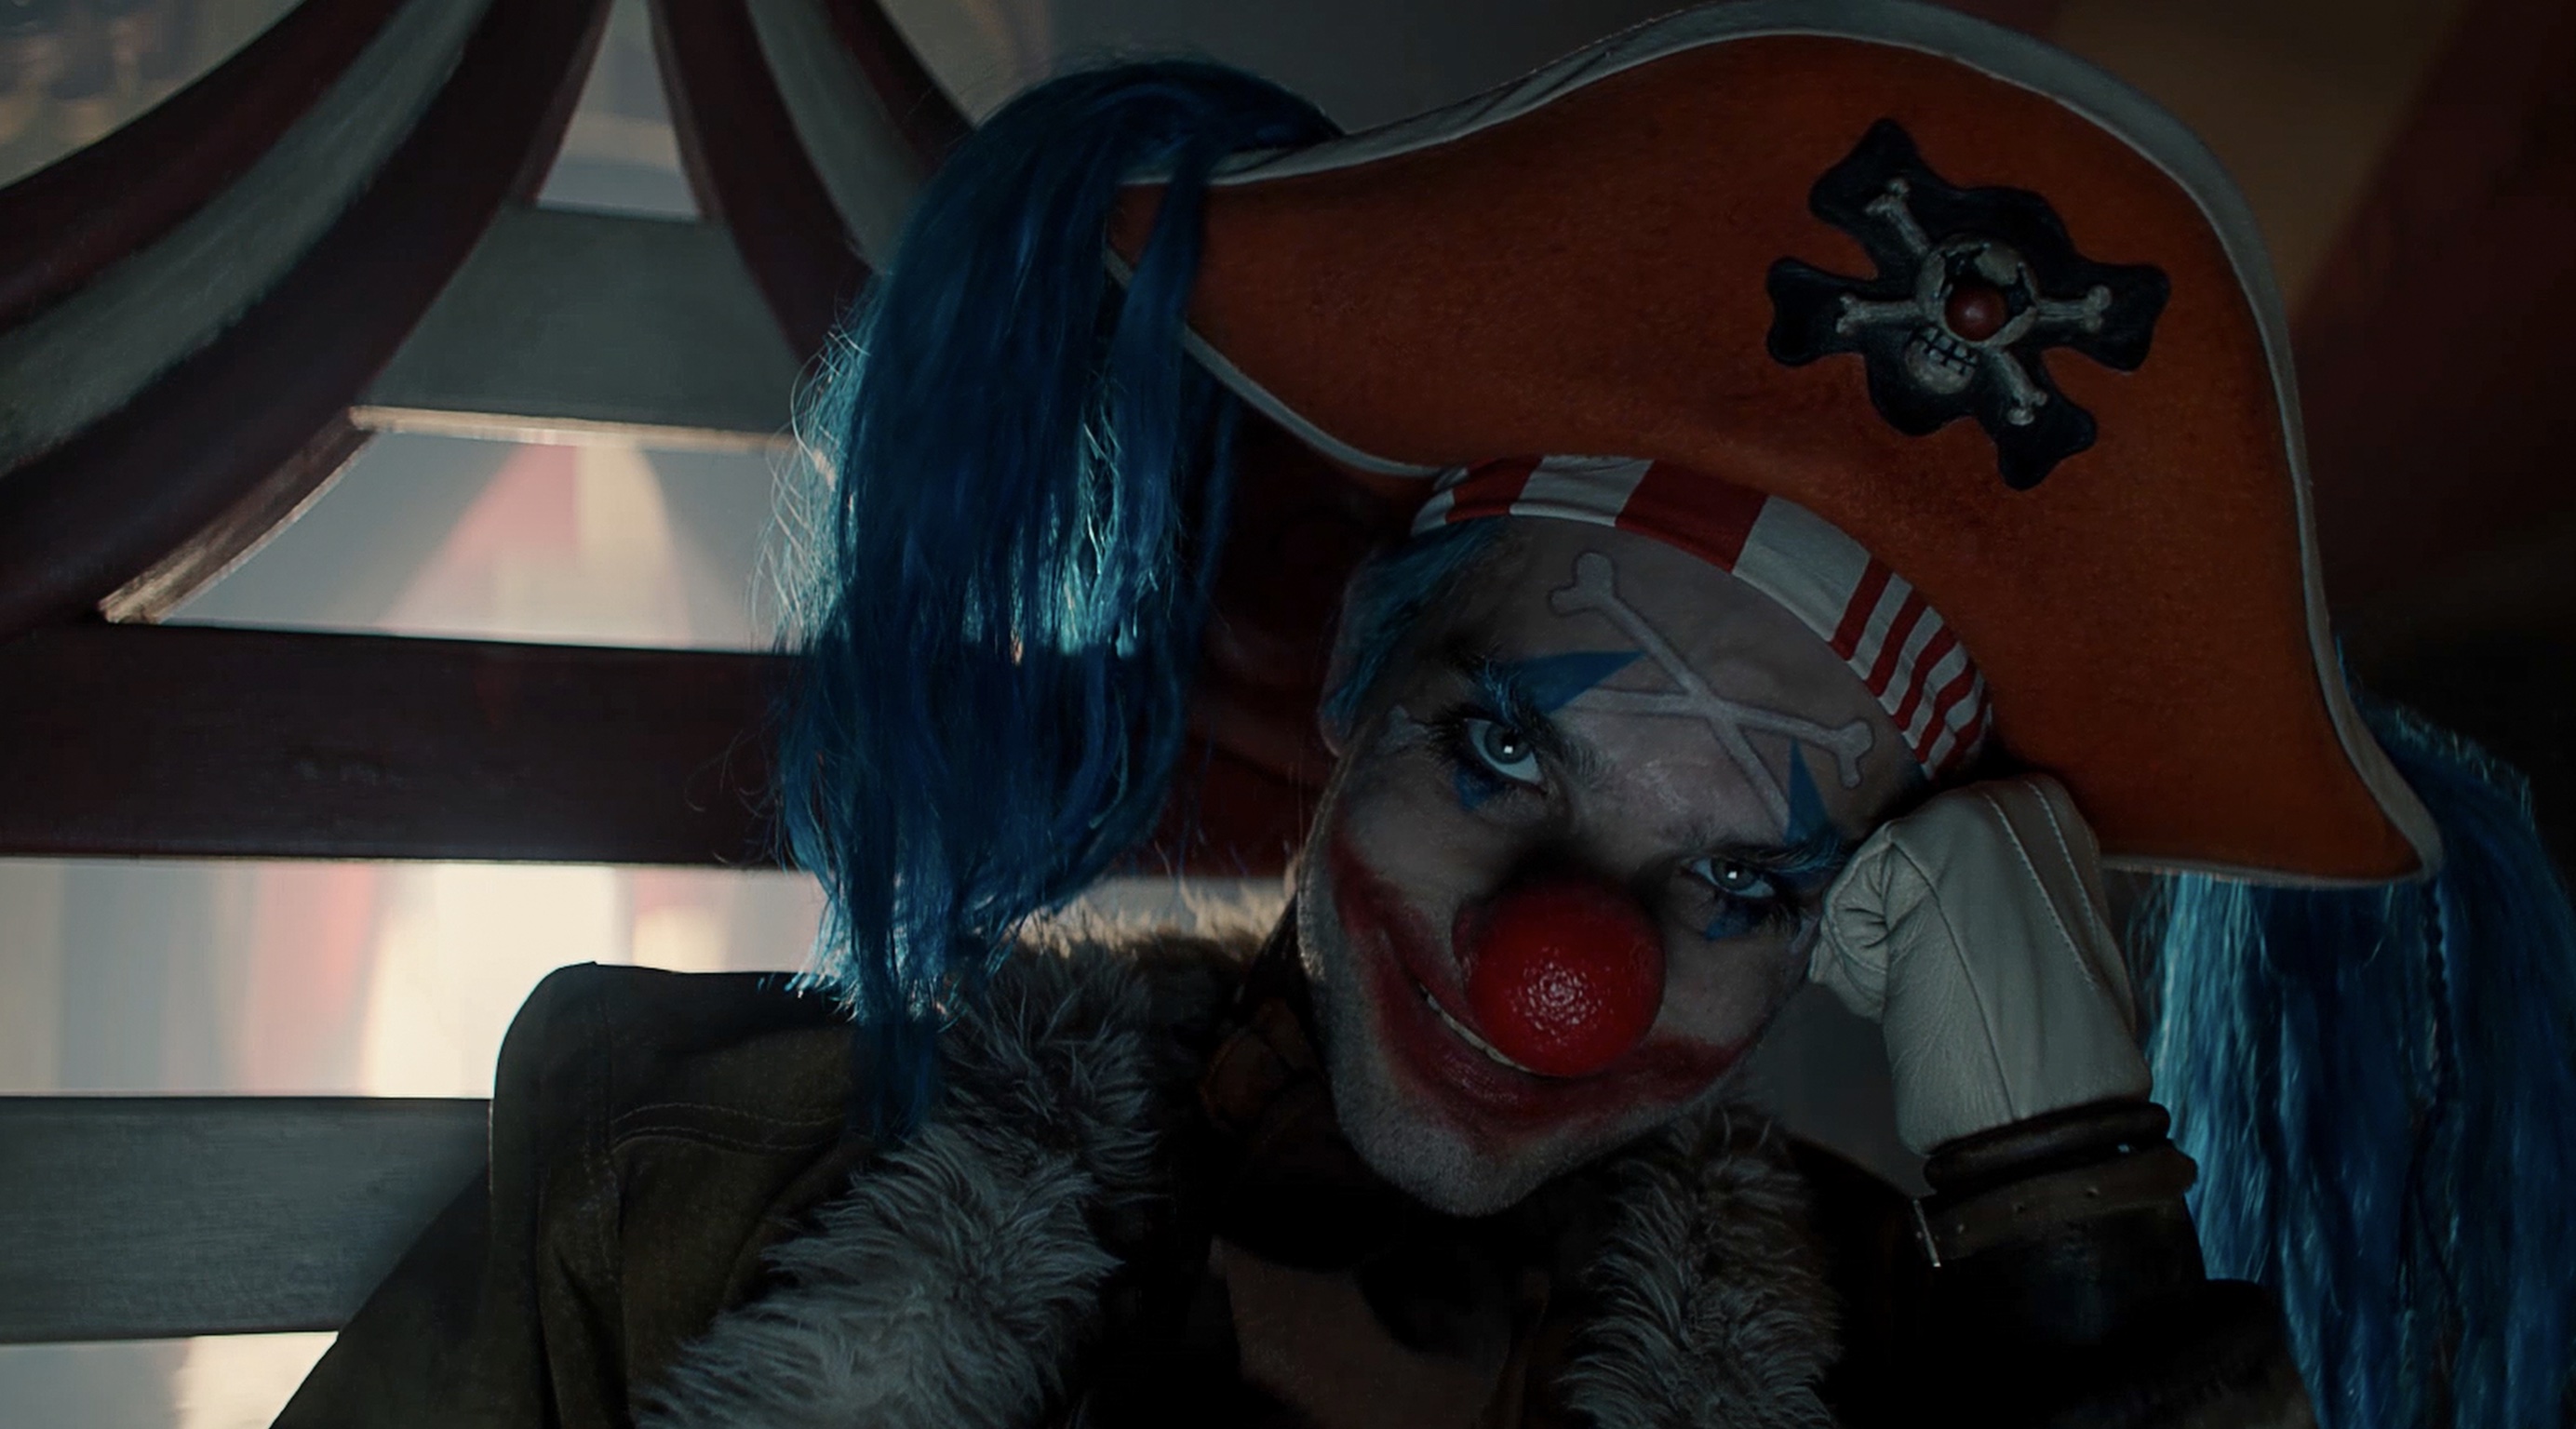 One Piece Cast on Netflix - Jeff Ward as Buggy the Clown